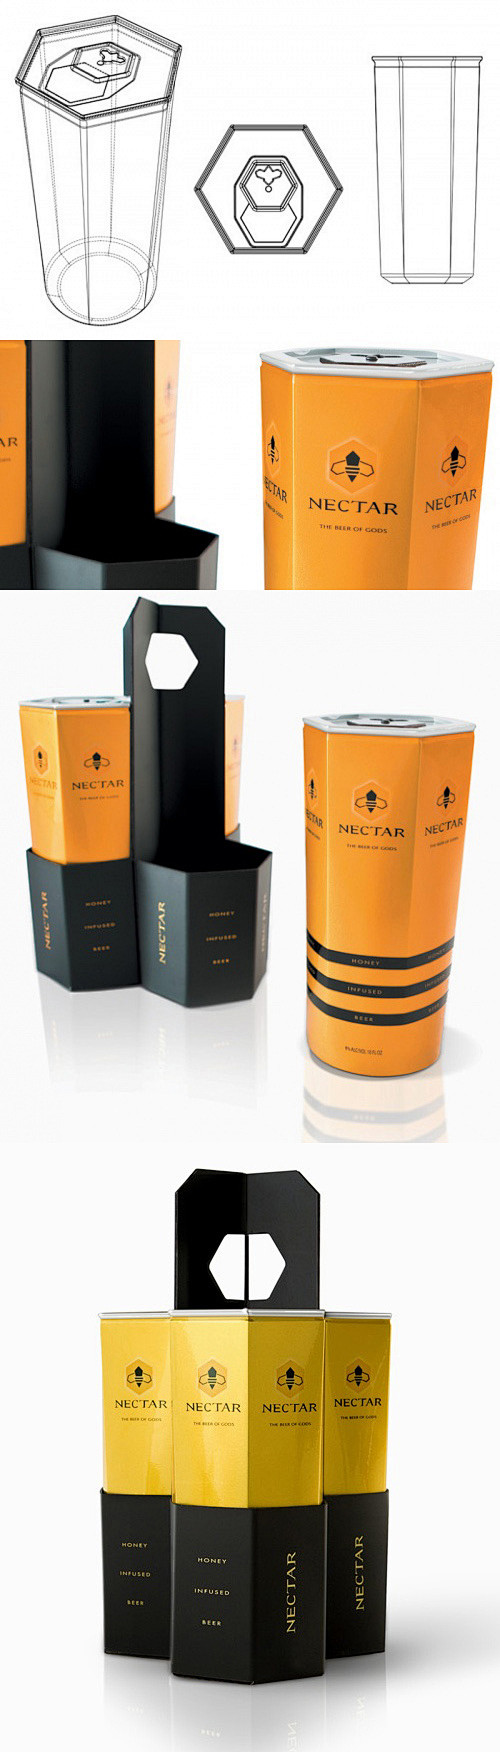 Nectar蜂蜜啤酒包装设计 http:...